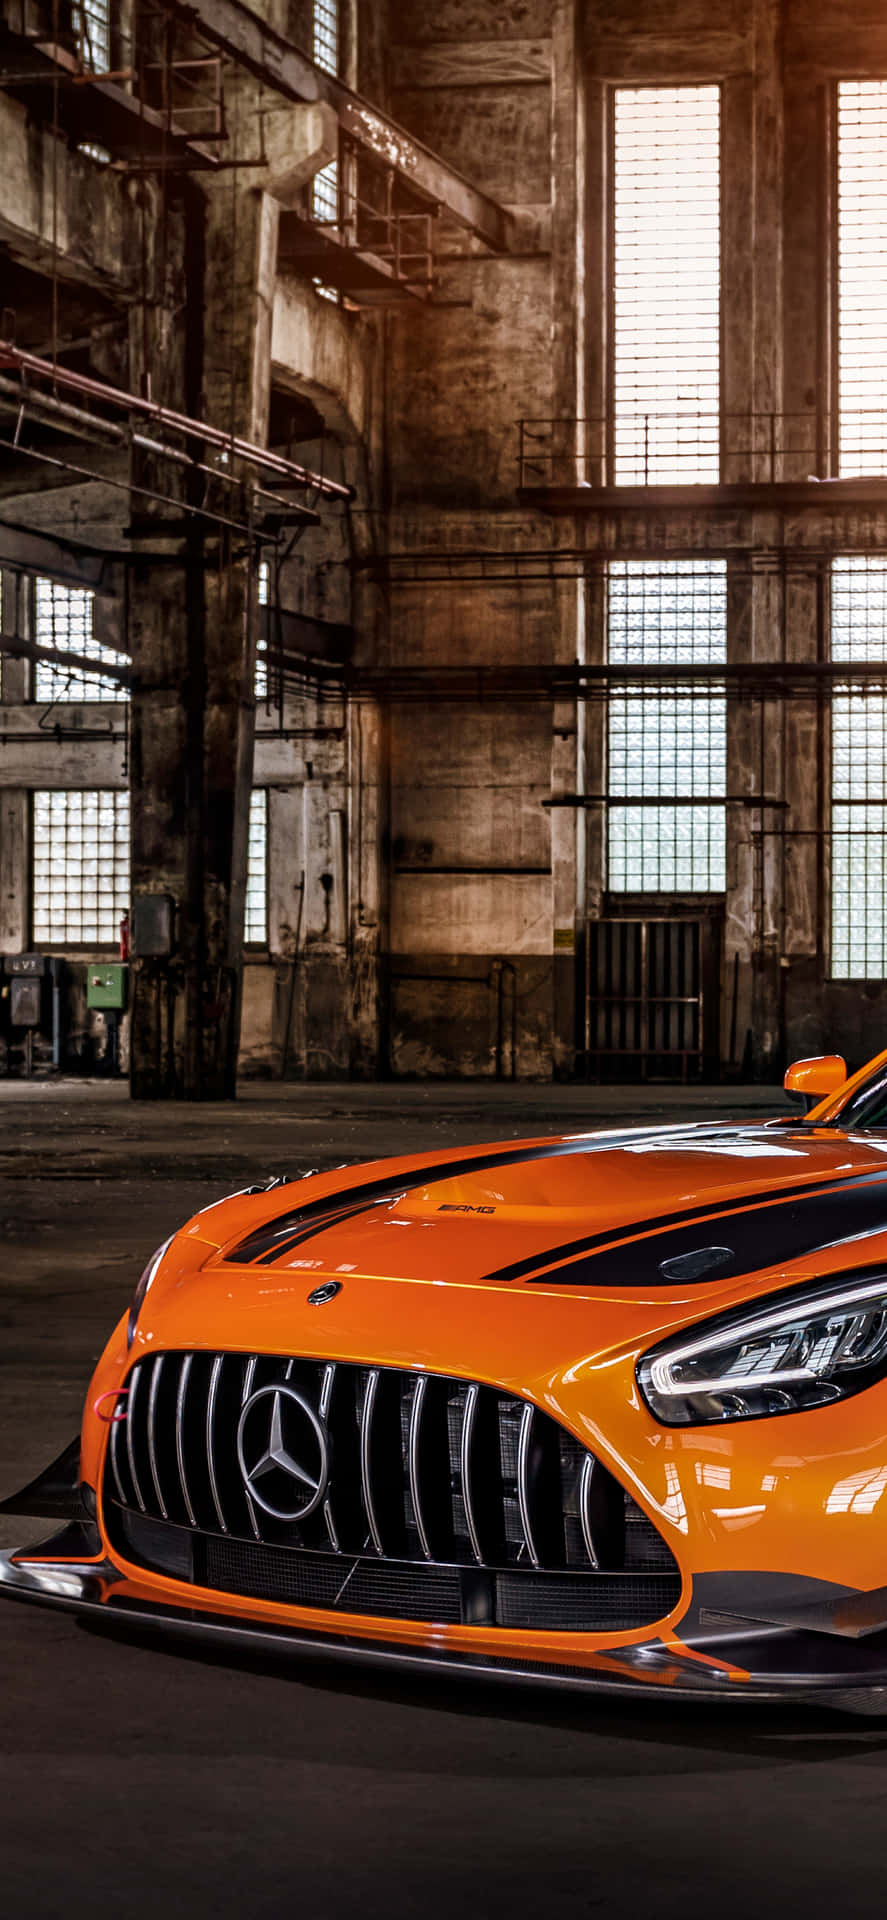 Orange Iphone Xs Mercedes Amg Baggrund I Gamle Fabrik